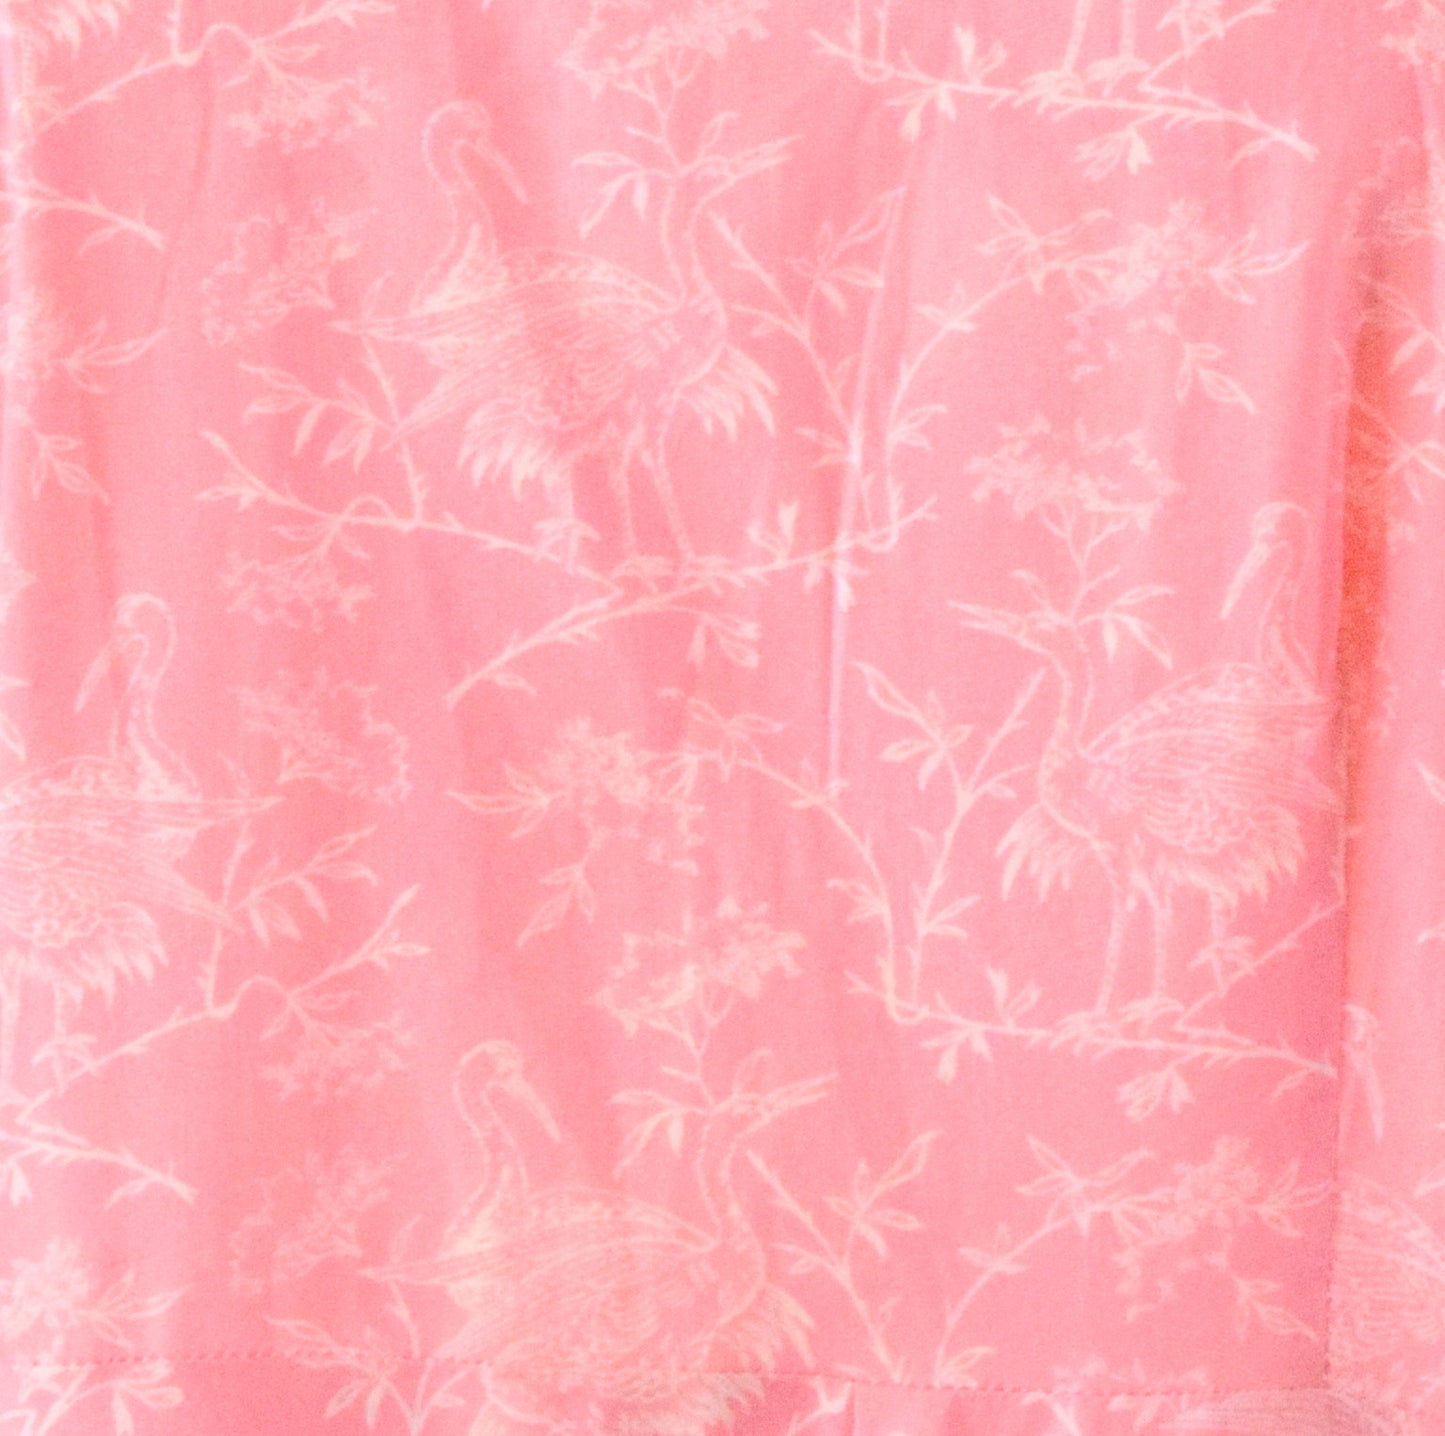 Vintage 1950s Cotton Fit & Flare Dress - Pink & White Bird Print sz 14